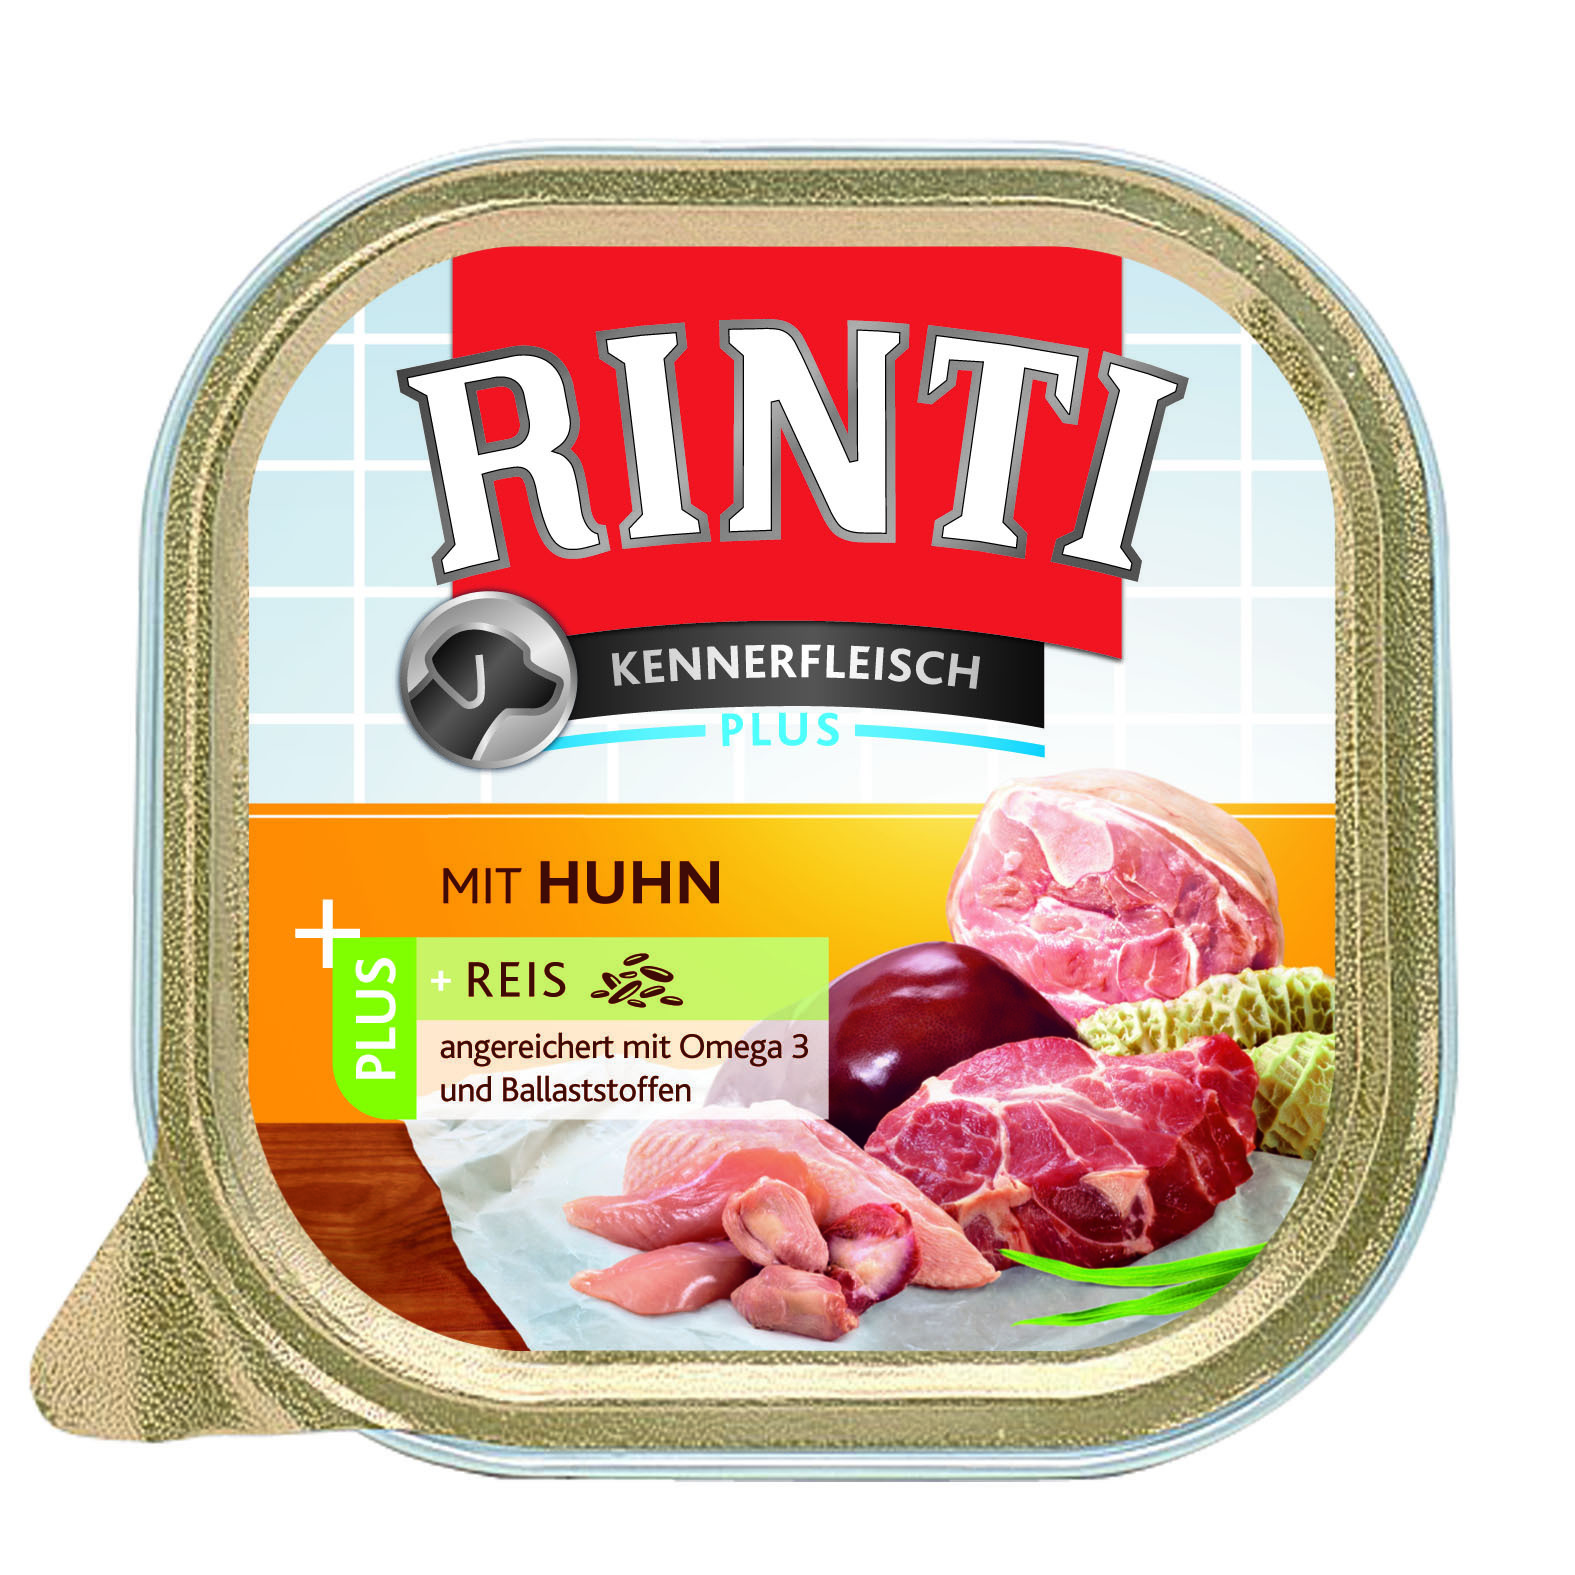 Rinti Kennerfleisch 9x300g Huhn